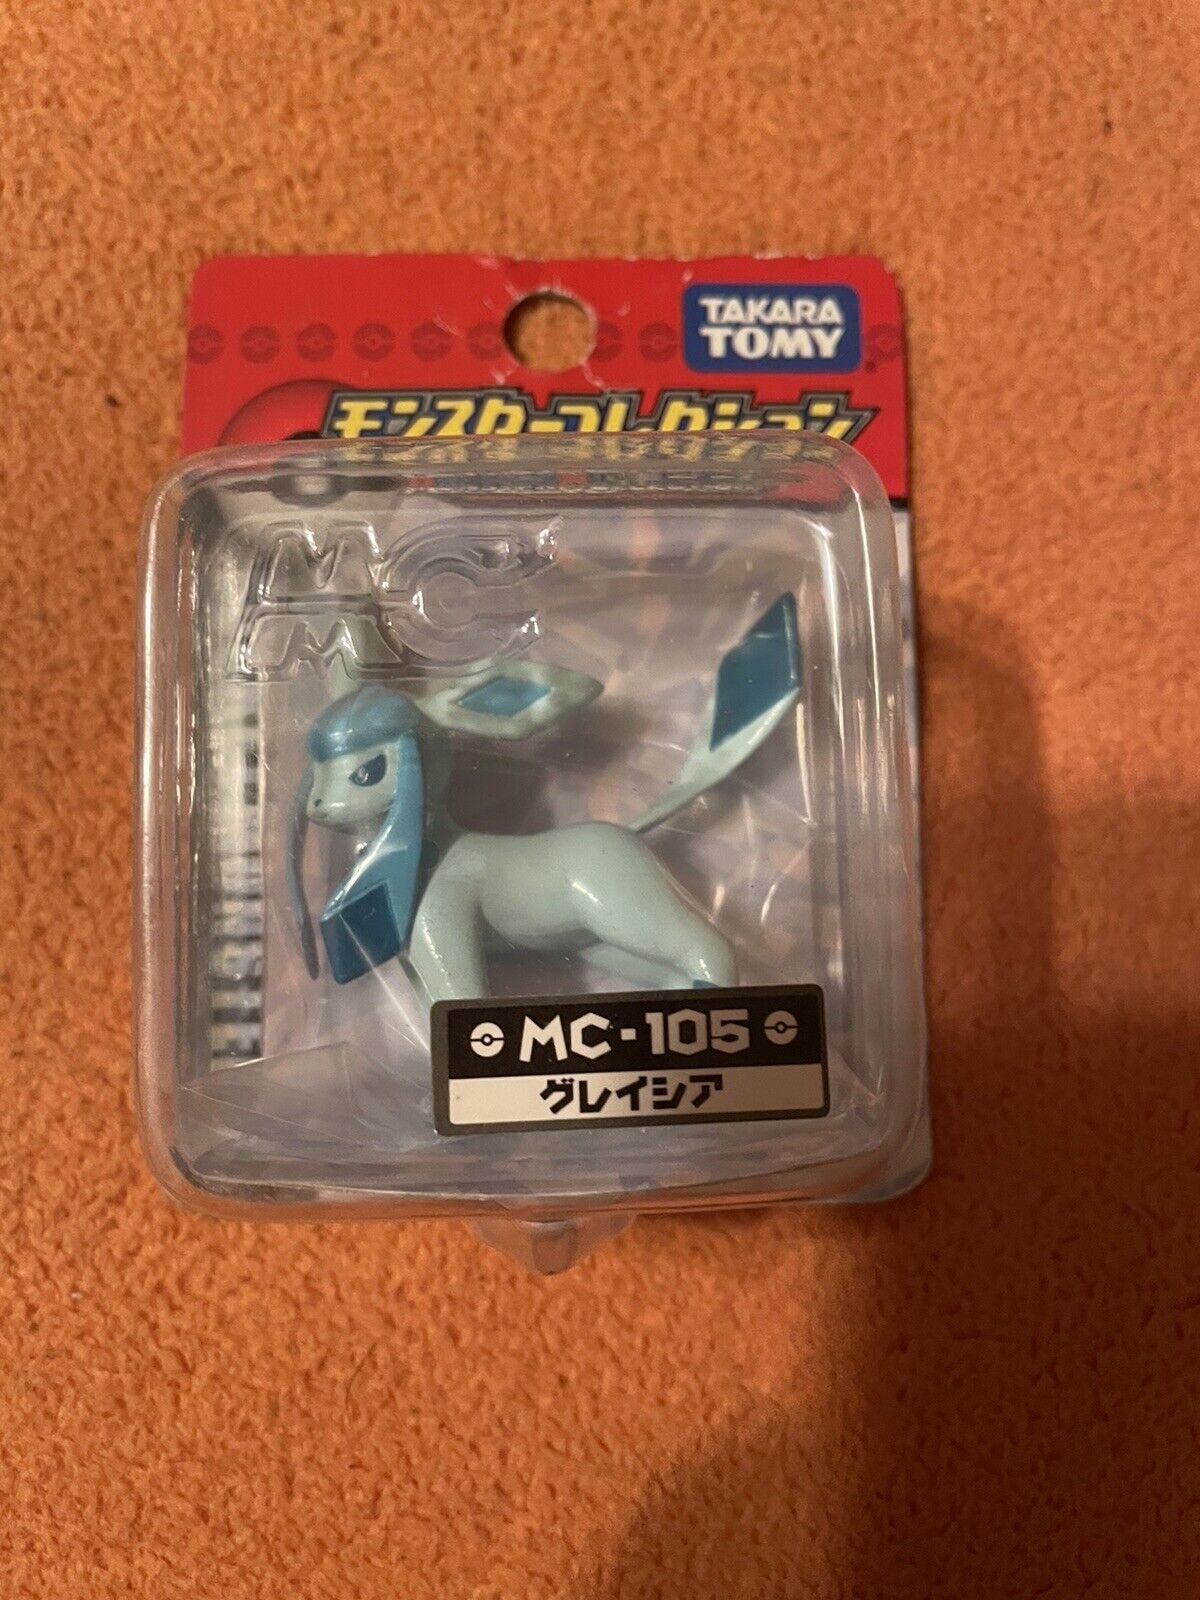 Takara Tomy - Pokémon Monster Collection MC-105 Glaceon - Vinyl Figure 2008